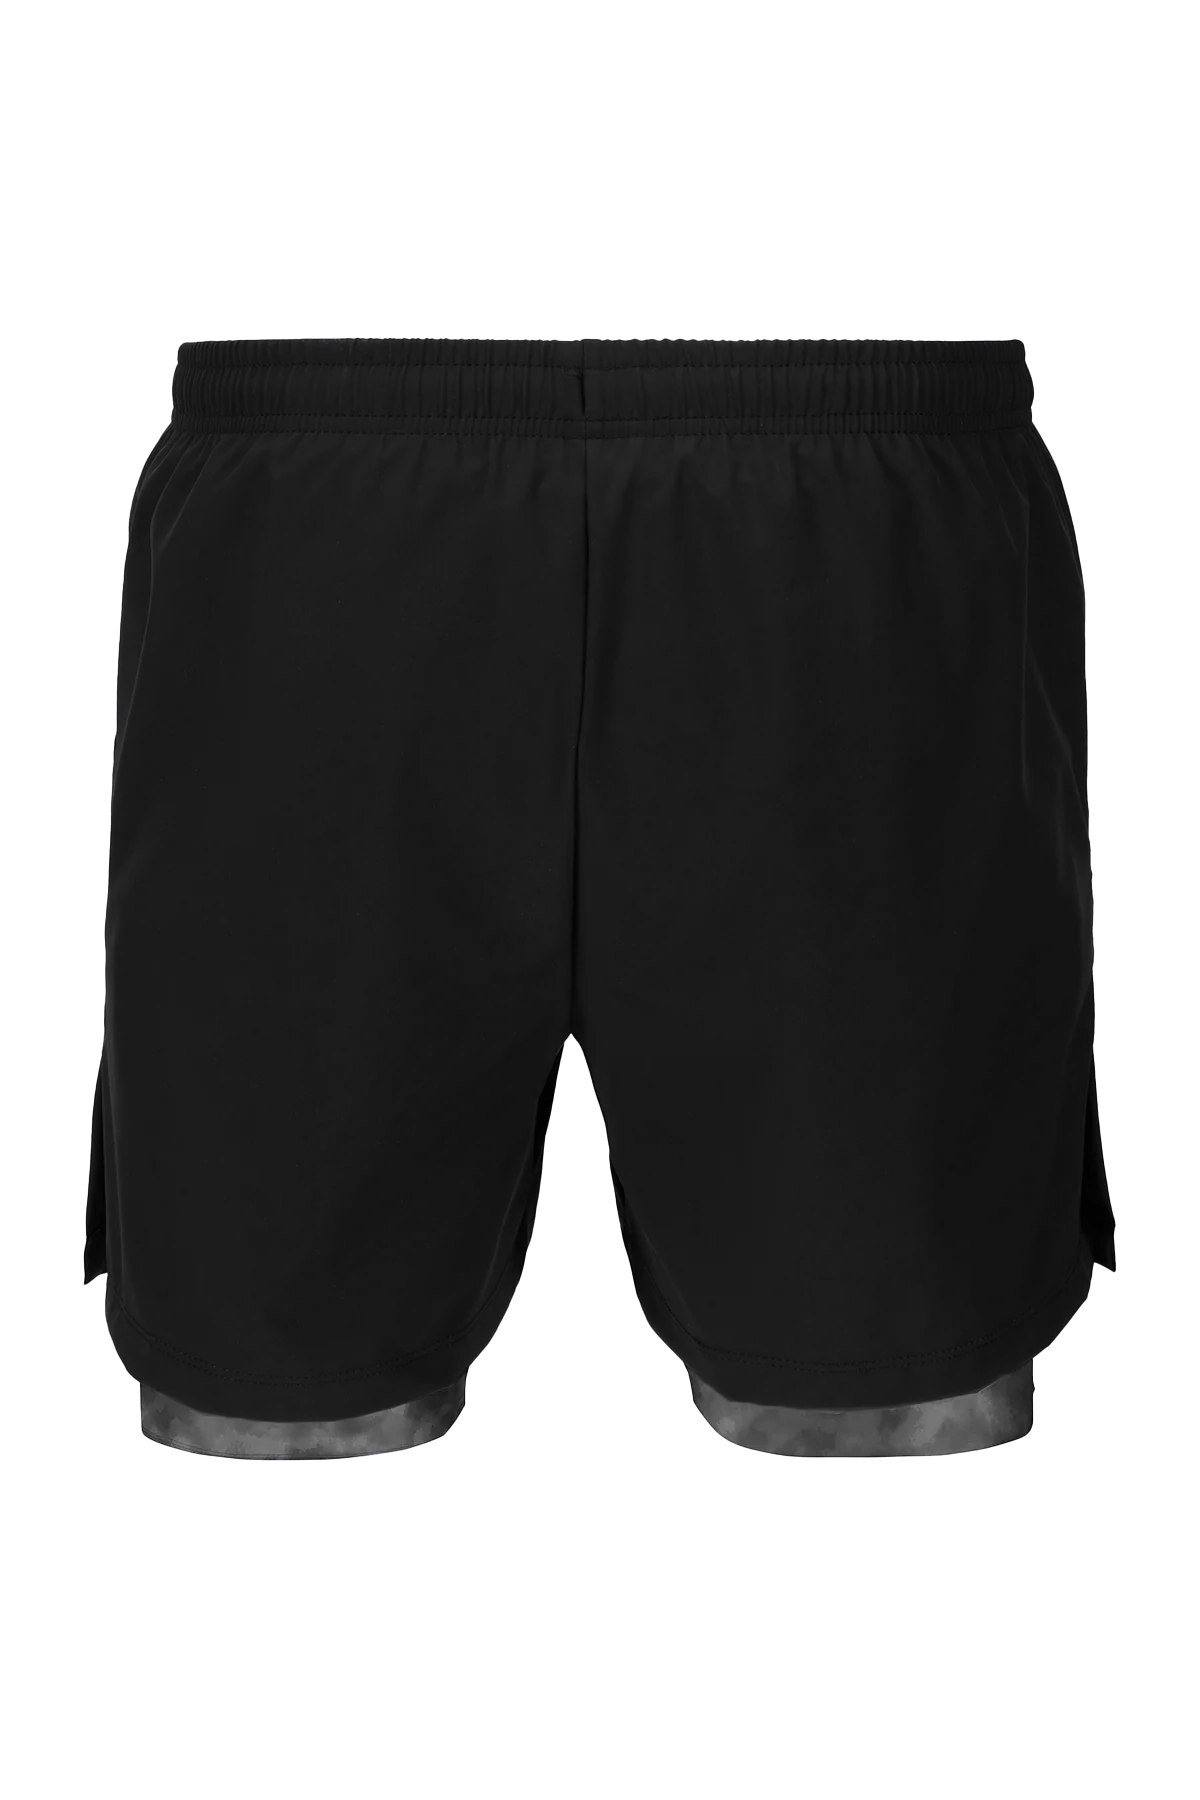 Shop Men's Training Shorts